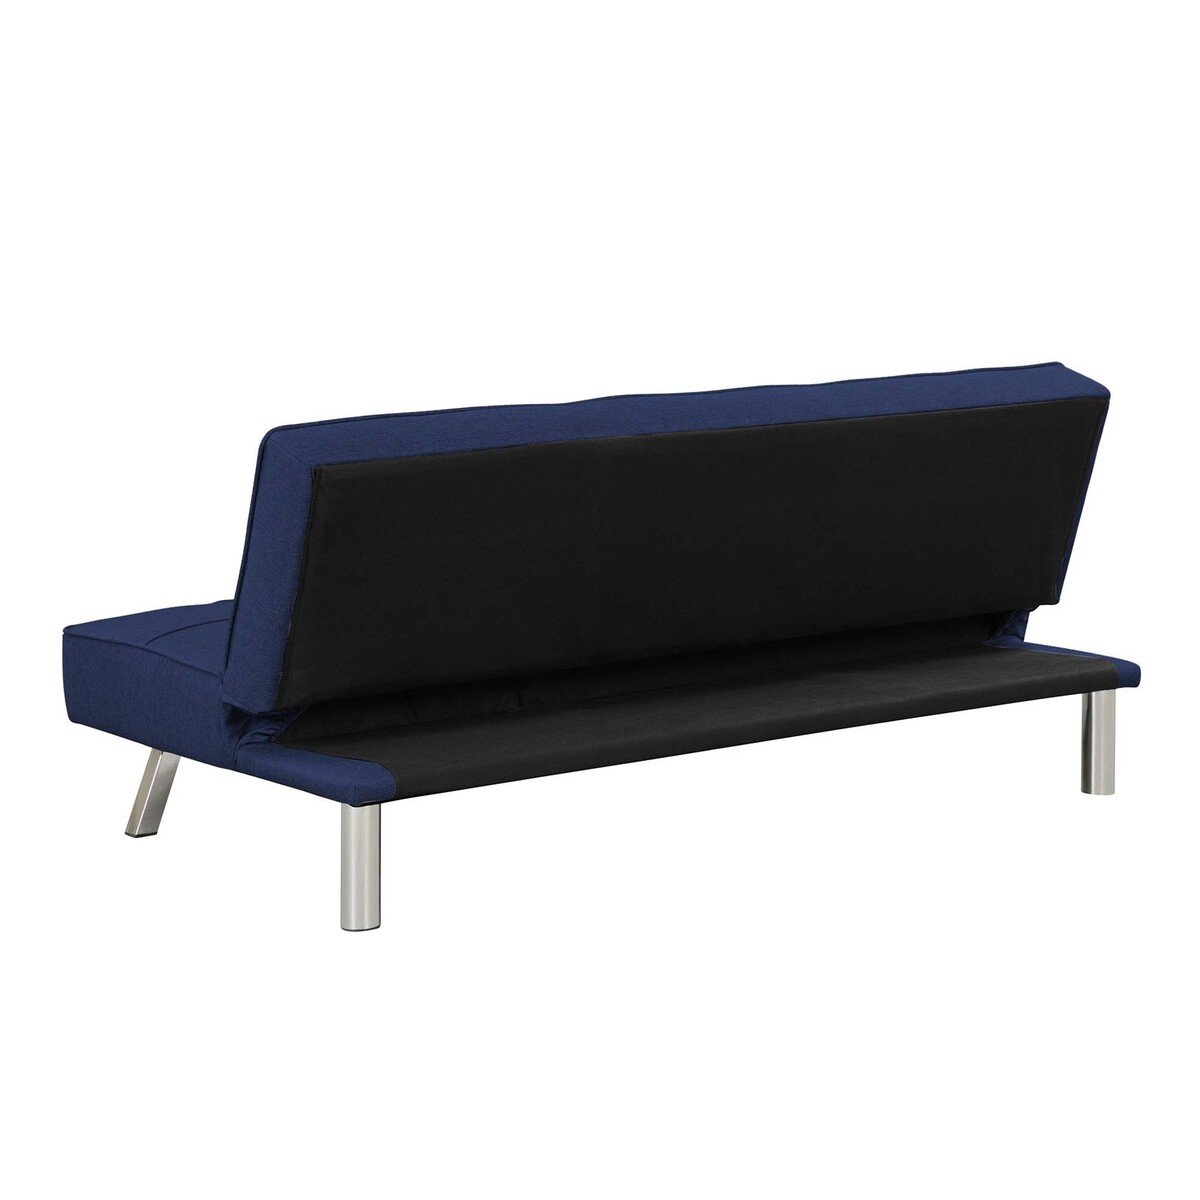 Maple Leaf Fabric Sofa Bed SF7809 Blue